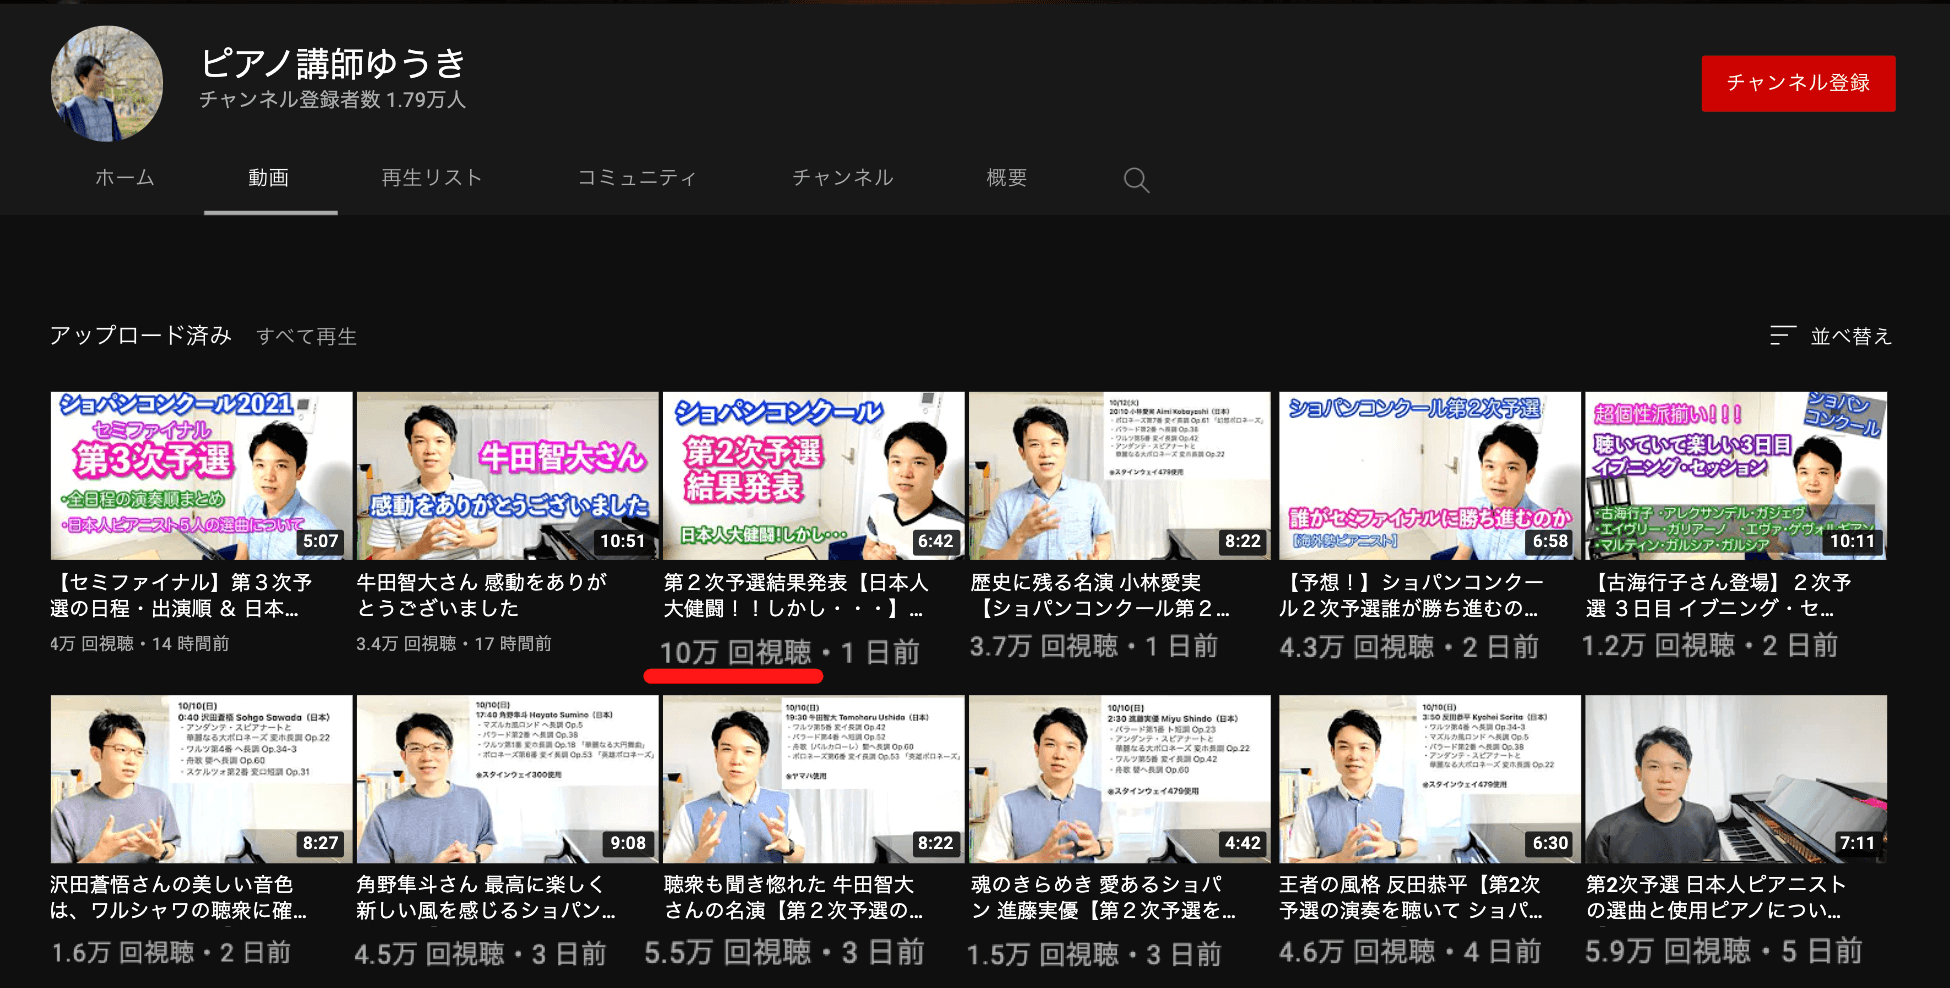 youtube-piano teacher yuki-many views video